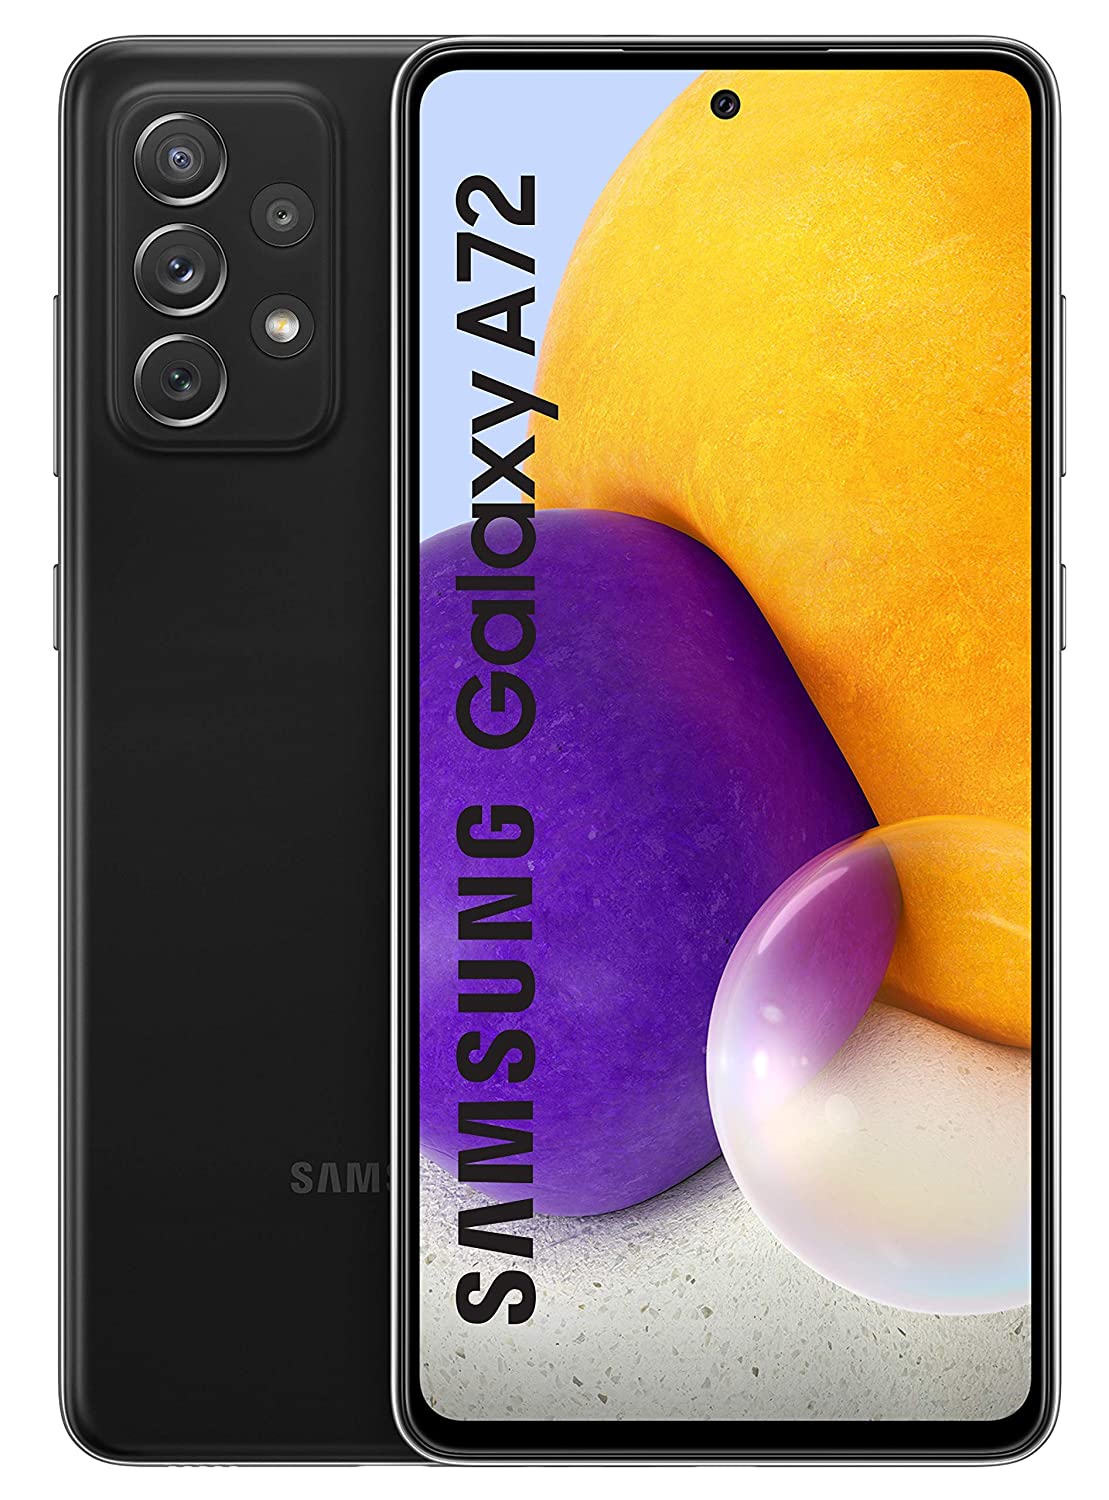 Samsung Android Smartphone A72 (8GB RAM, 128GB Storage/ROM) A725FG Black